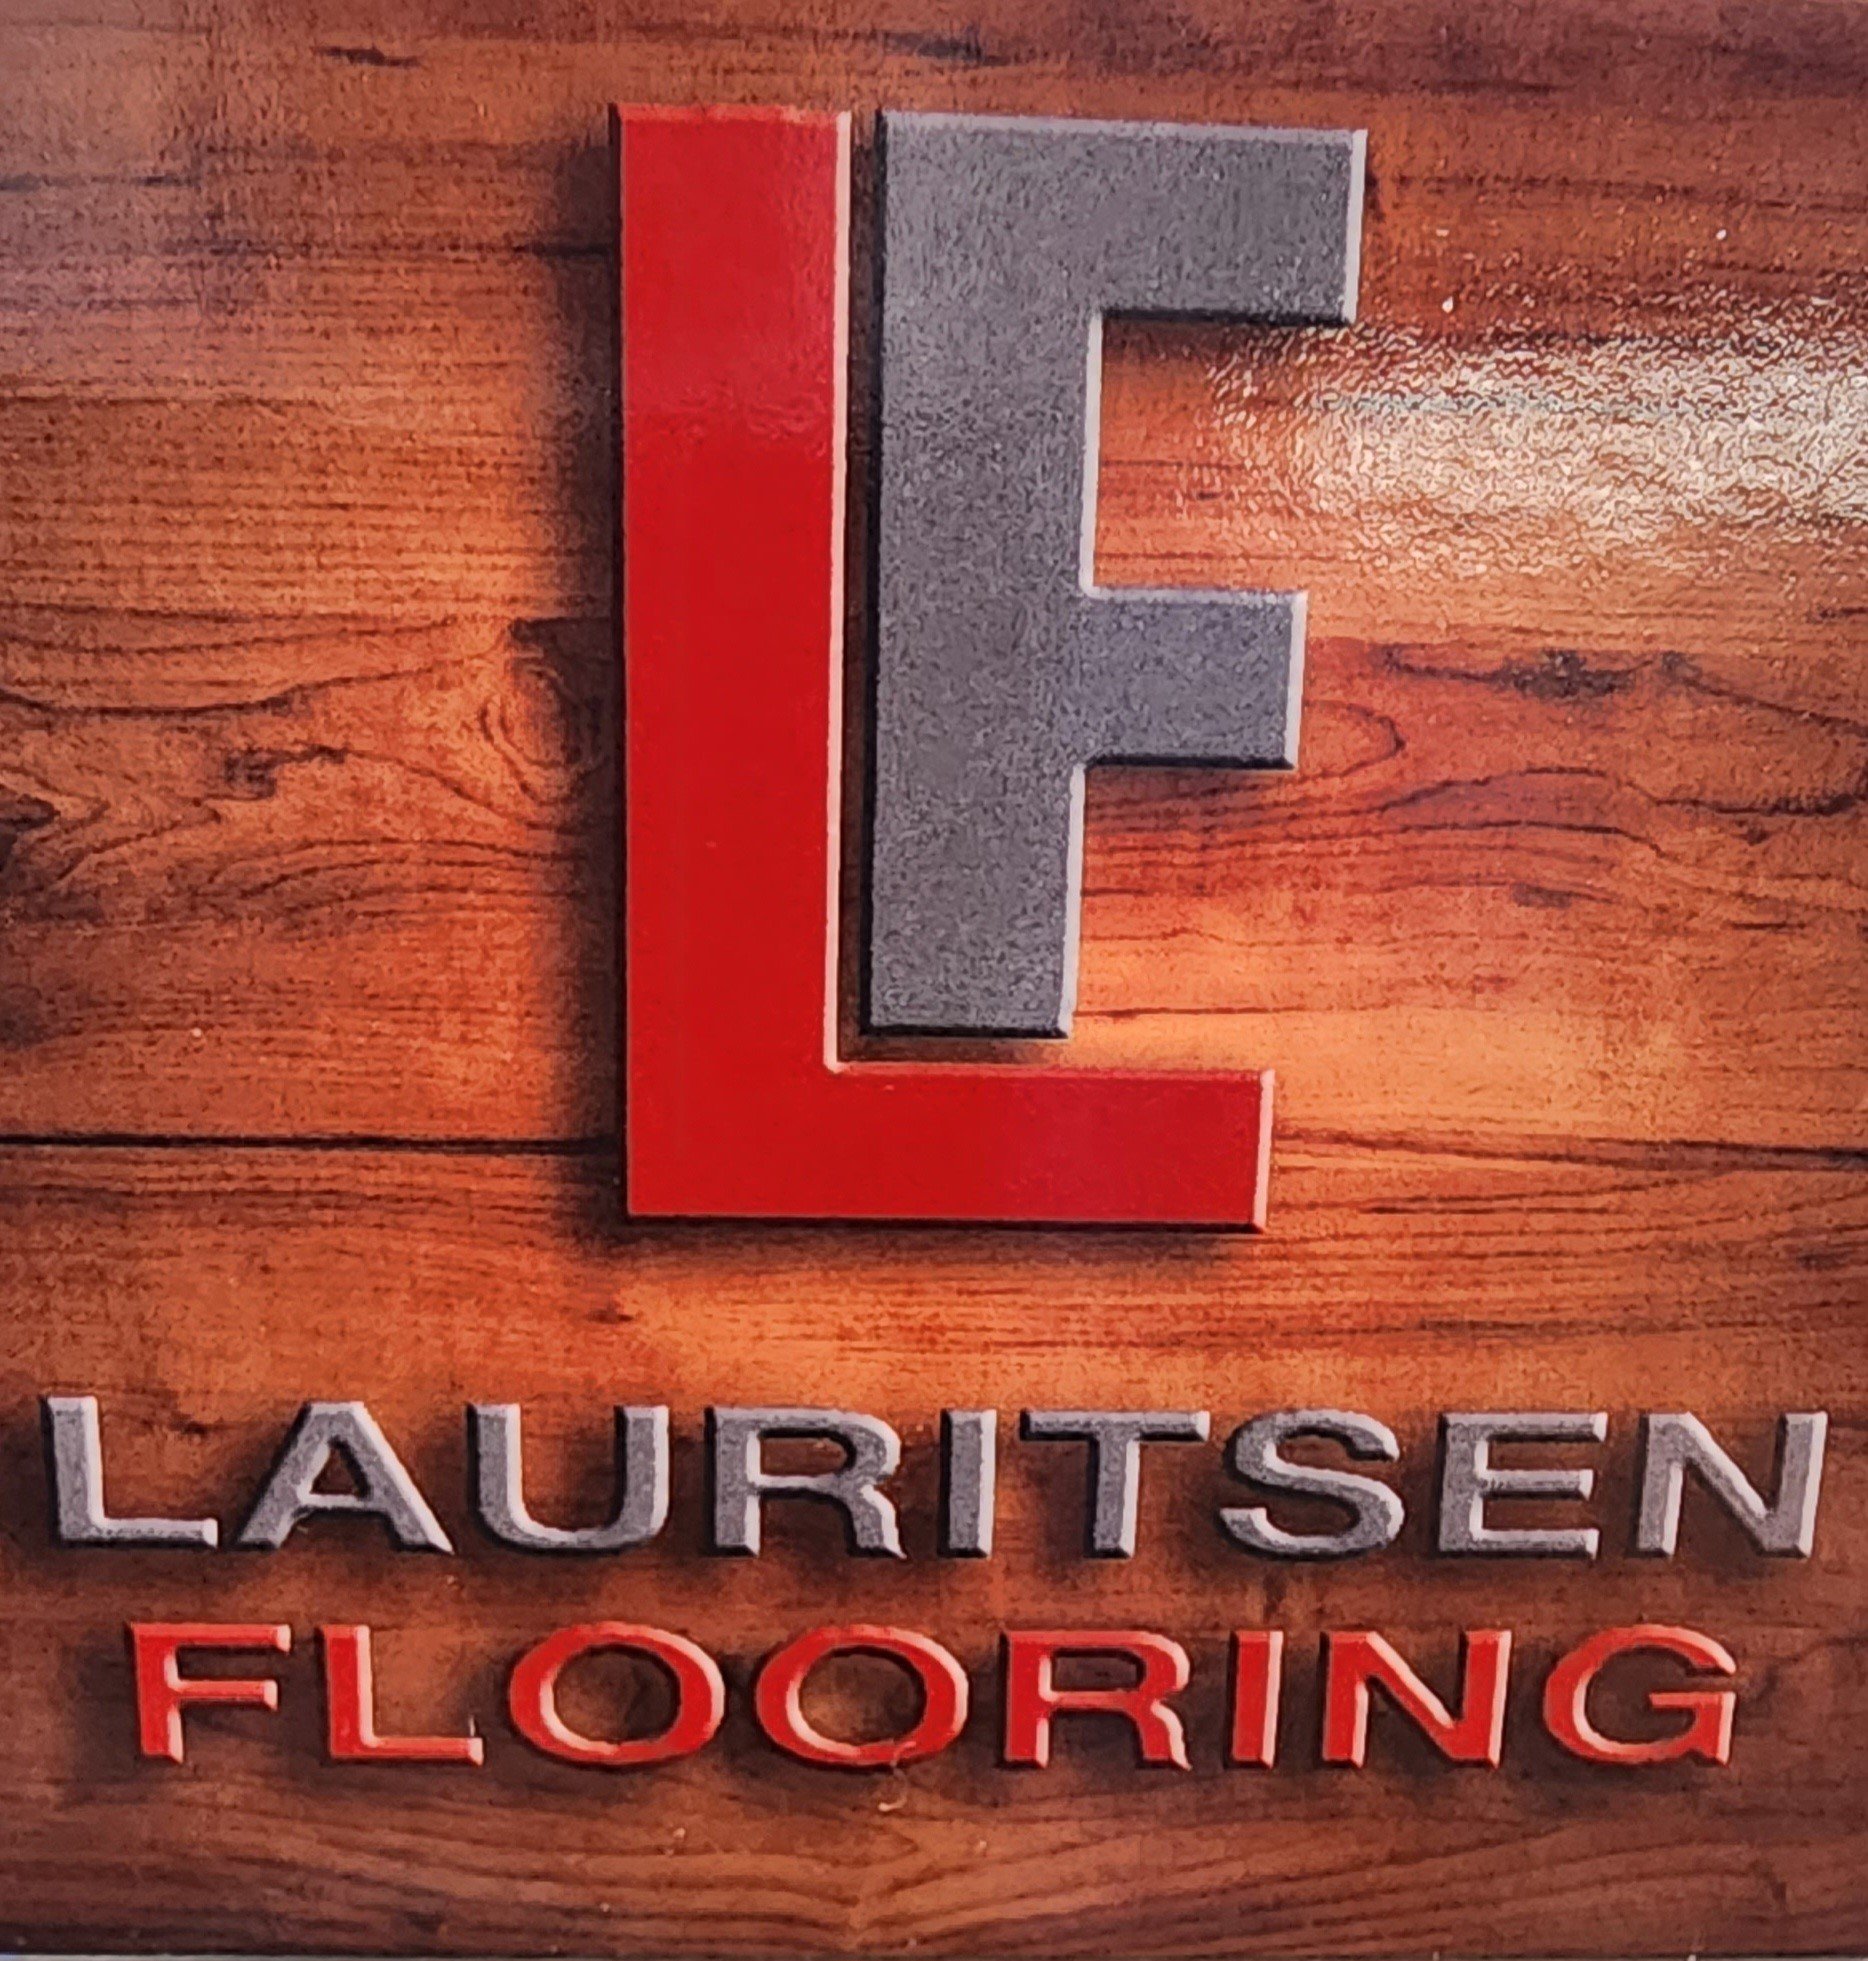 Lauritsen Flooring Logo